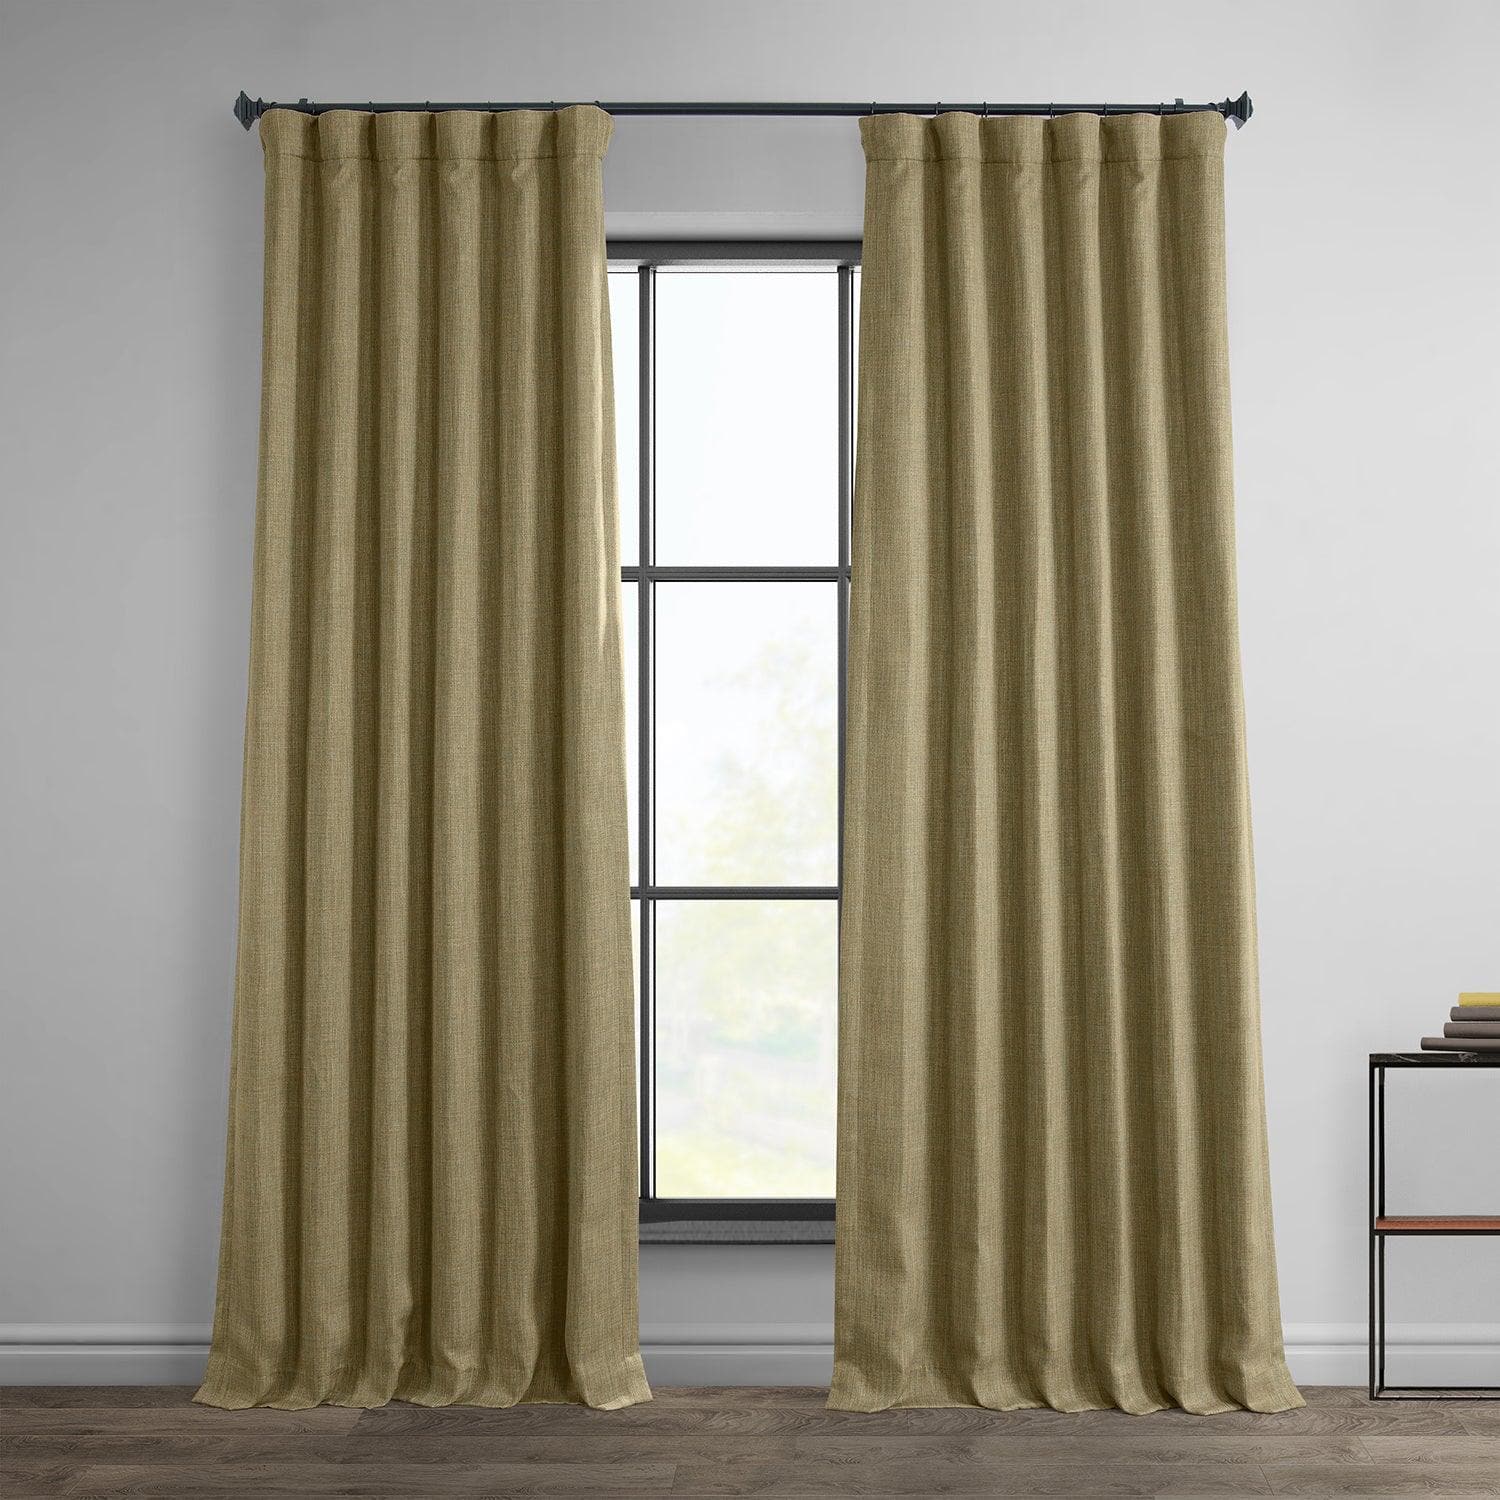 Nomad Tan Textured Faux Linen Room Darkening Curtain